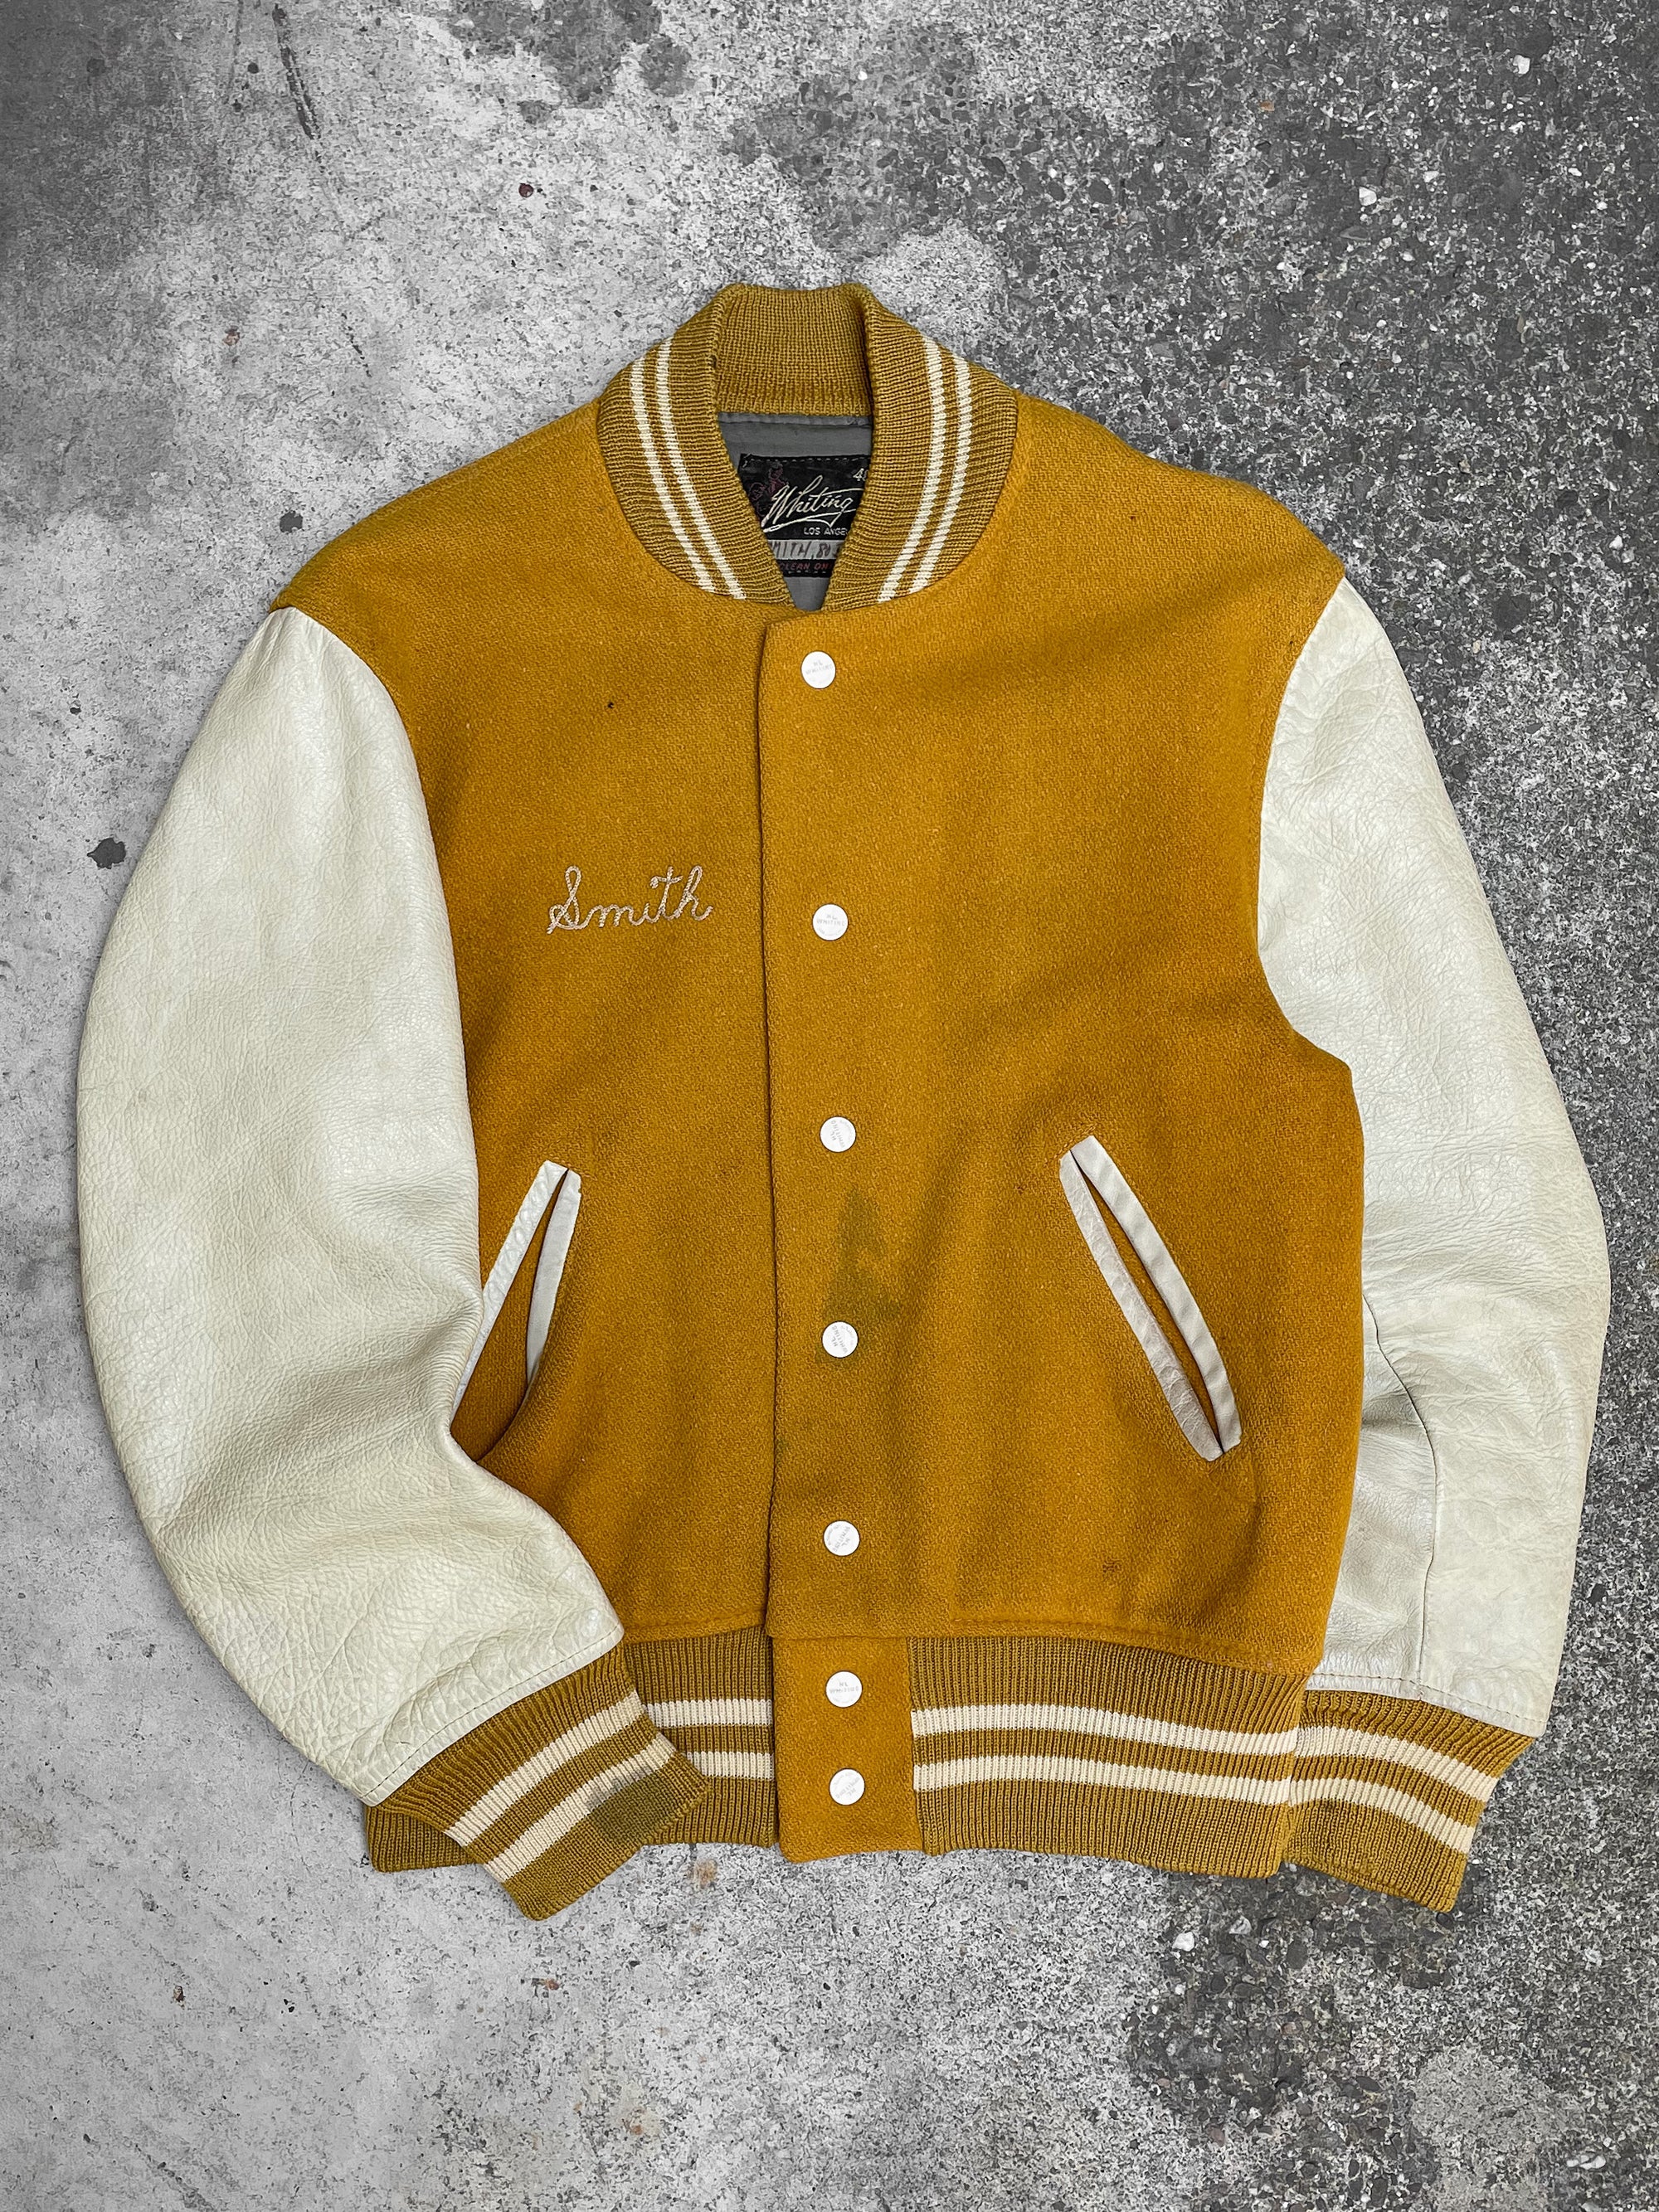 1970s “Smith” Chain Stitched Varsity Jacket (S)